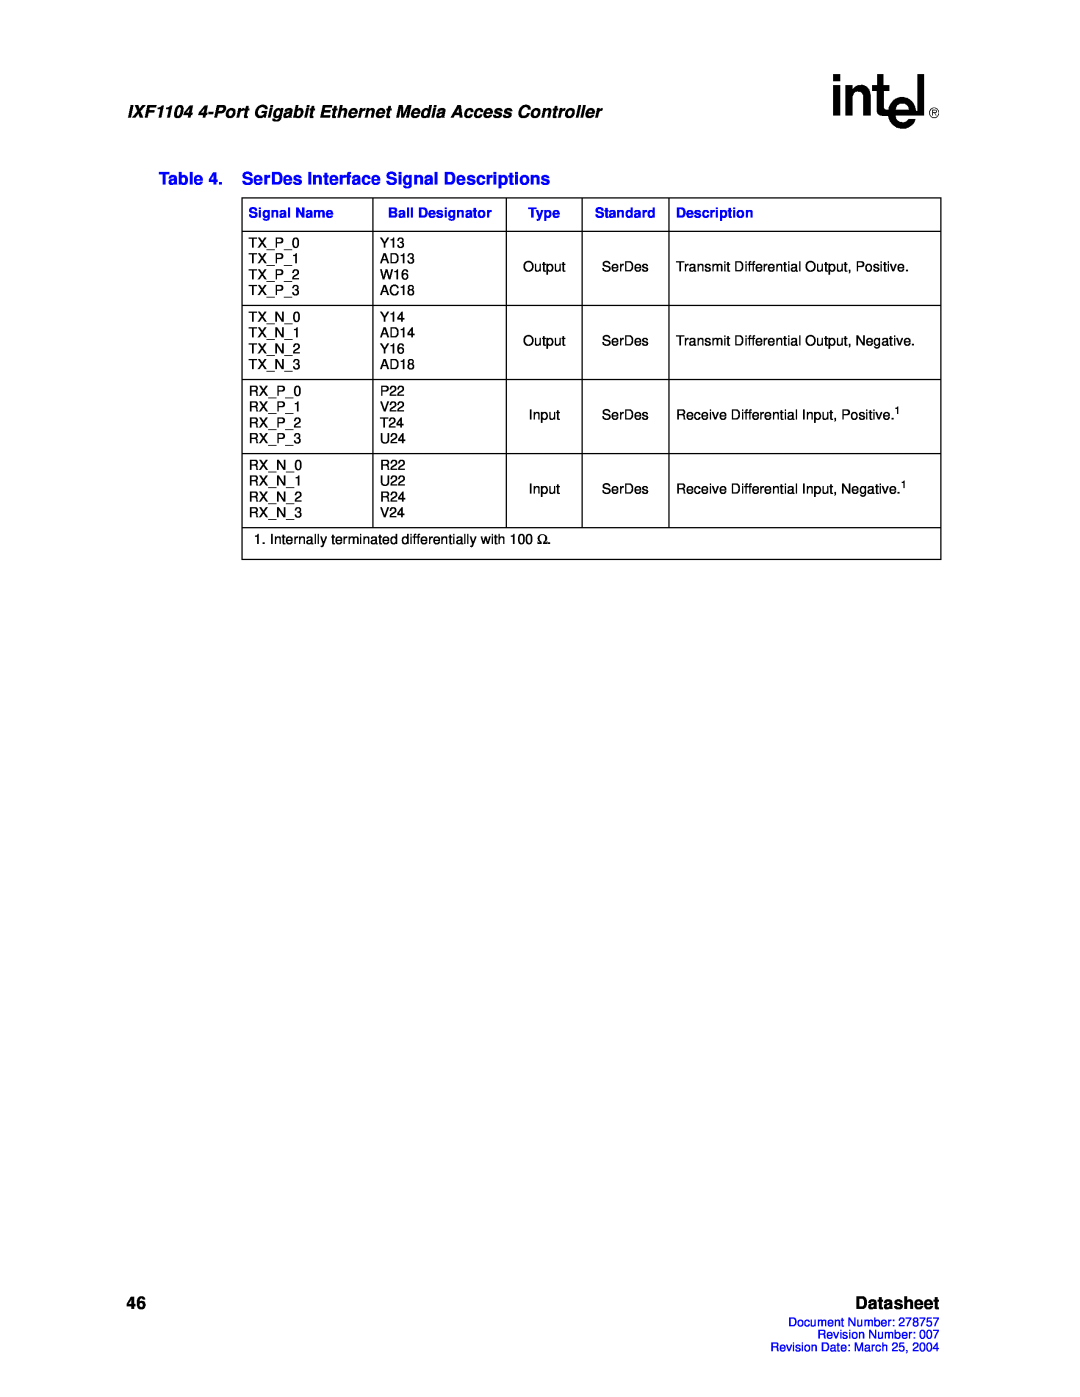 Intel IXF1104 manual SerDes Interface Signal Descriptions, Datasheet 